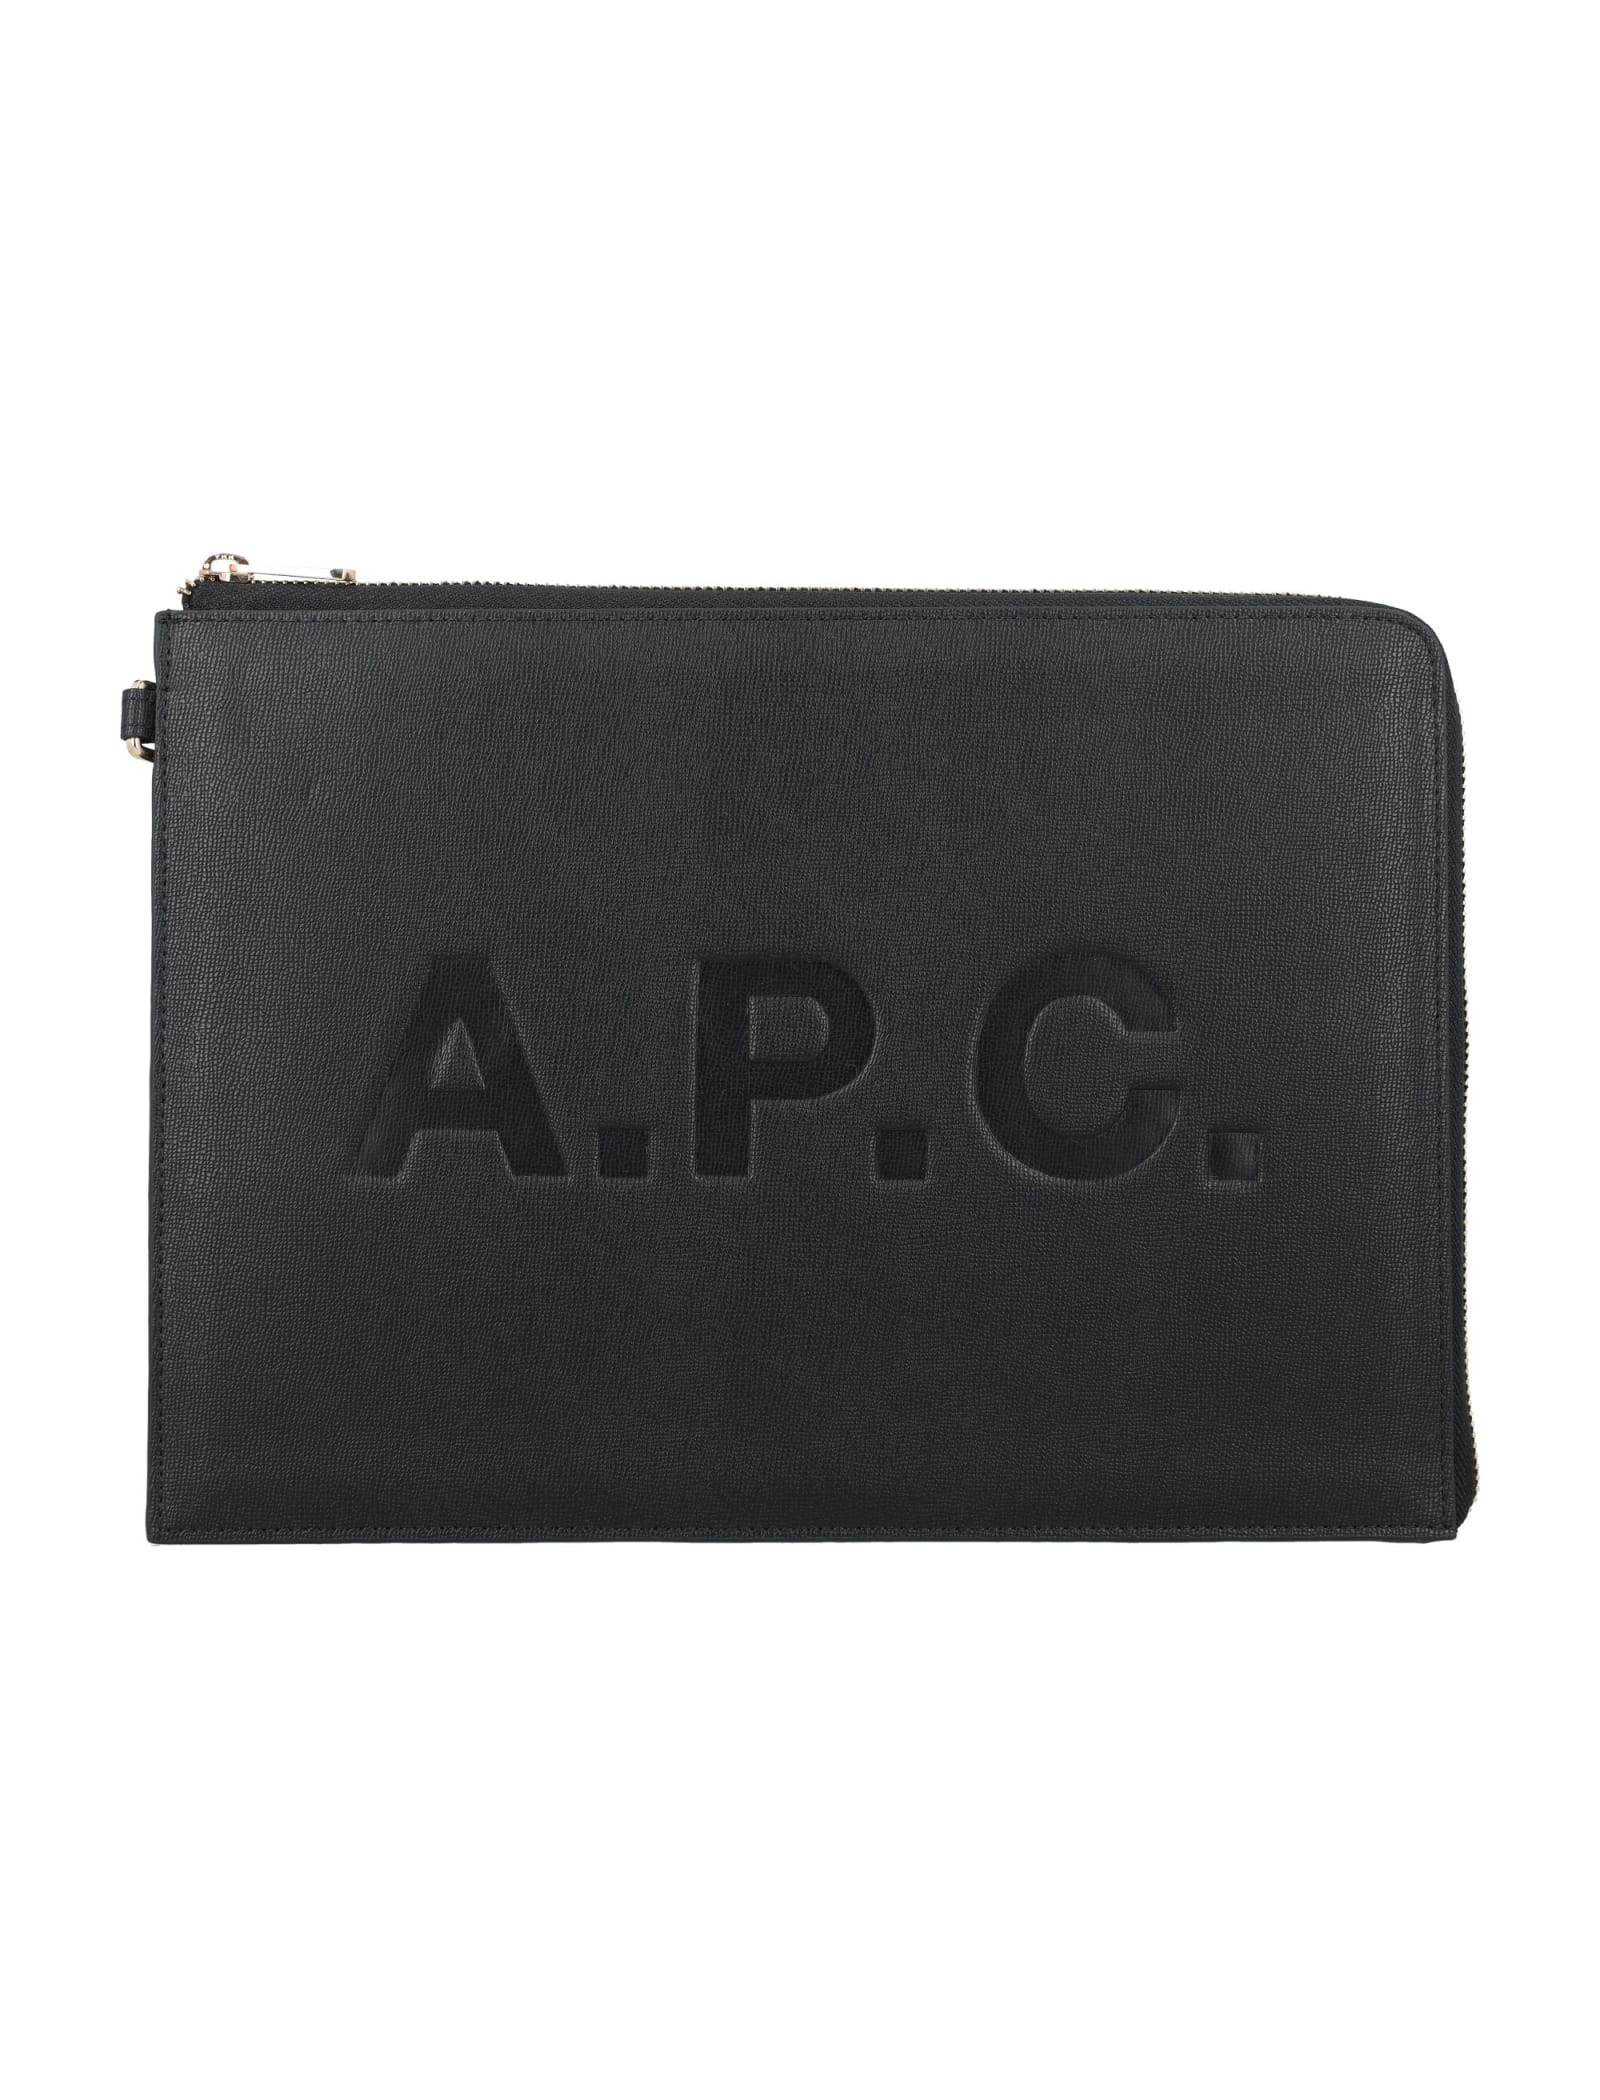 A.P.C. Tablet Bag